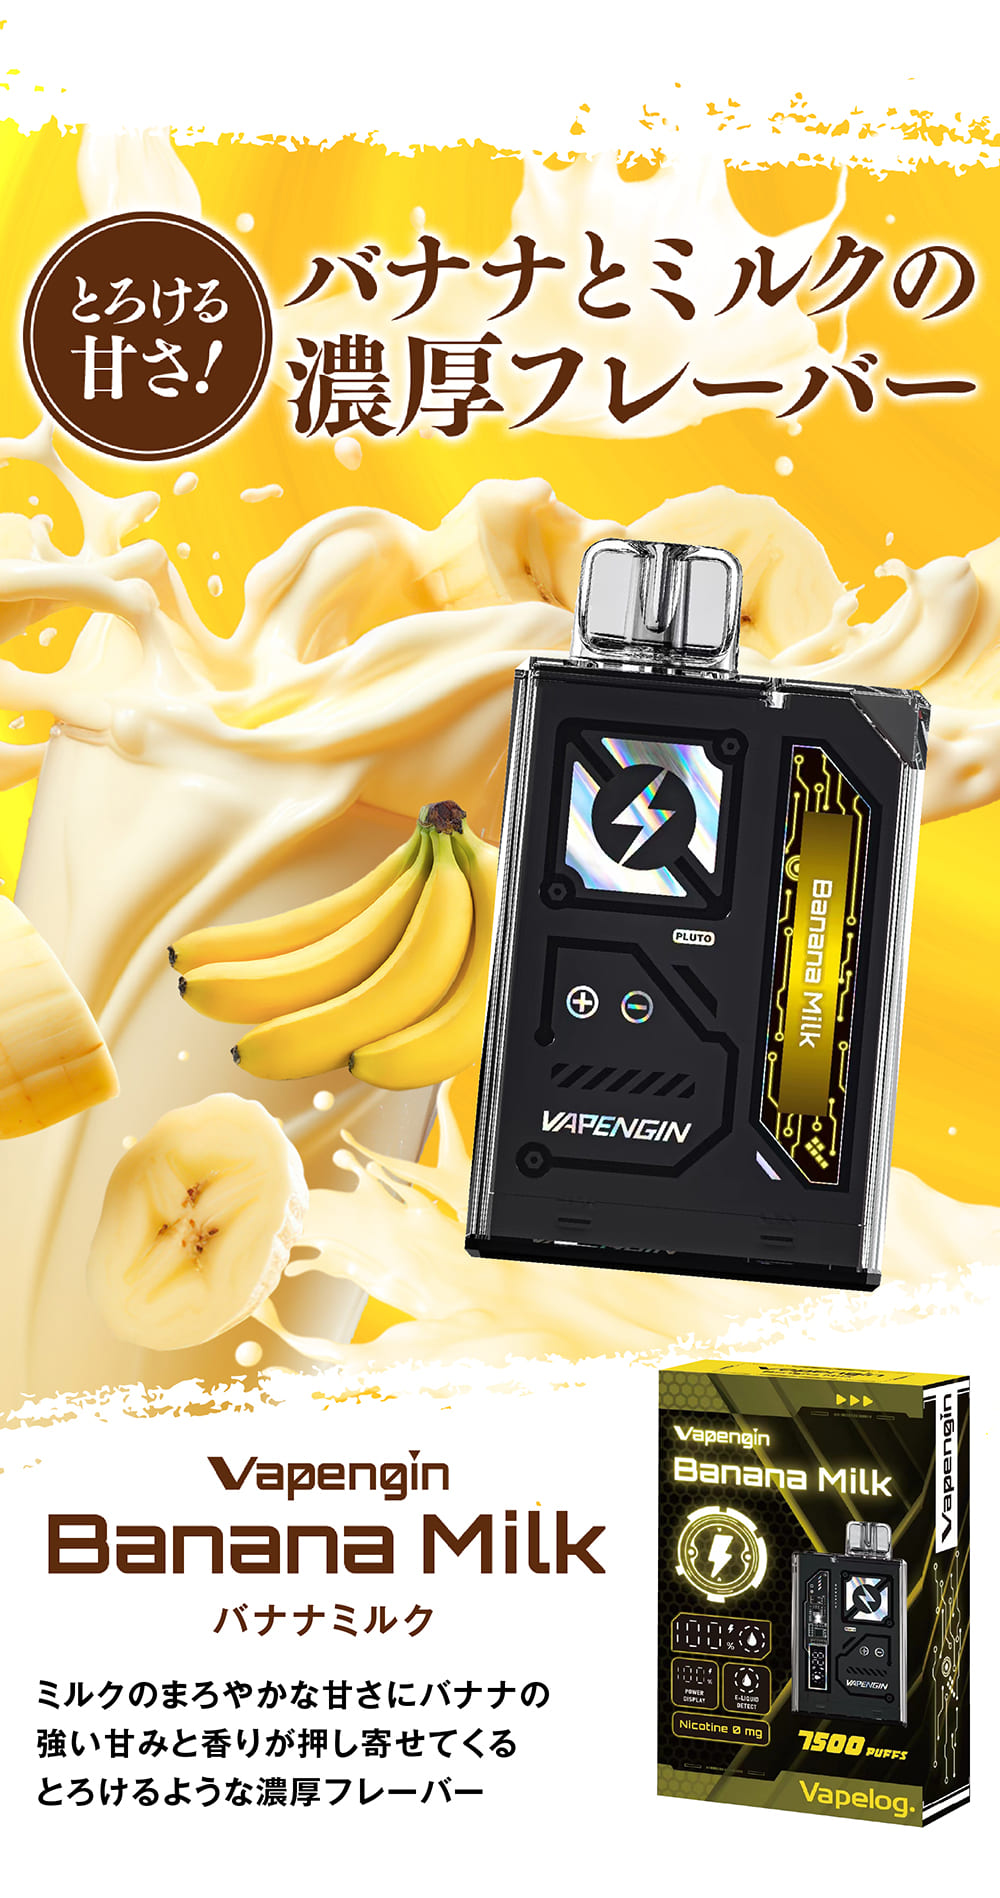 Vapengin7500 (ベイプエンジン) Banana Milk(バナナミルク)